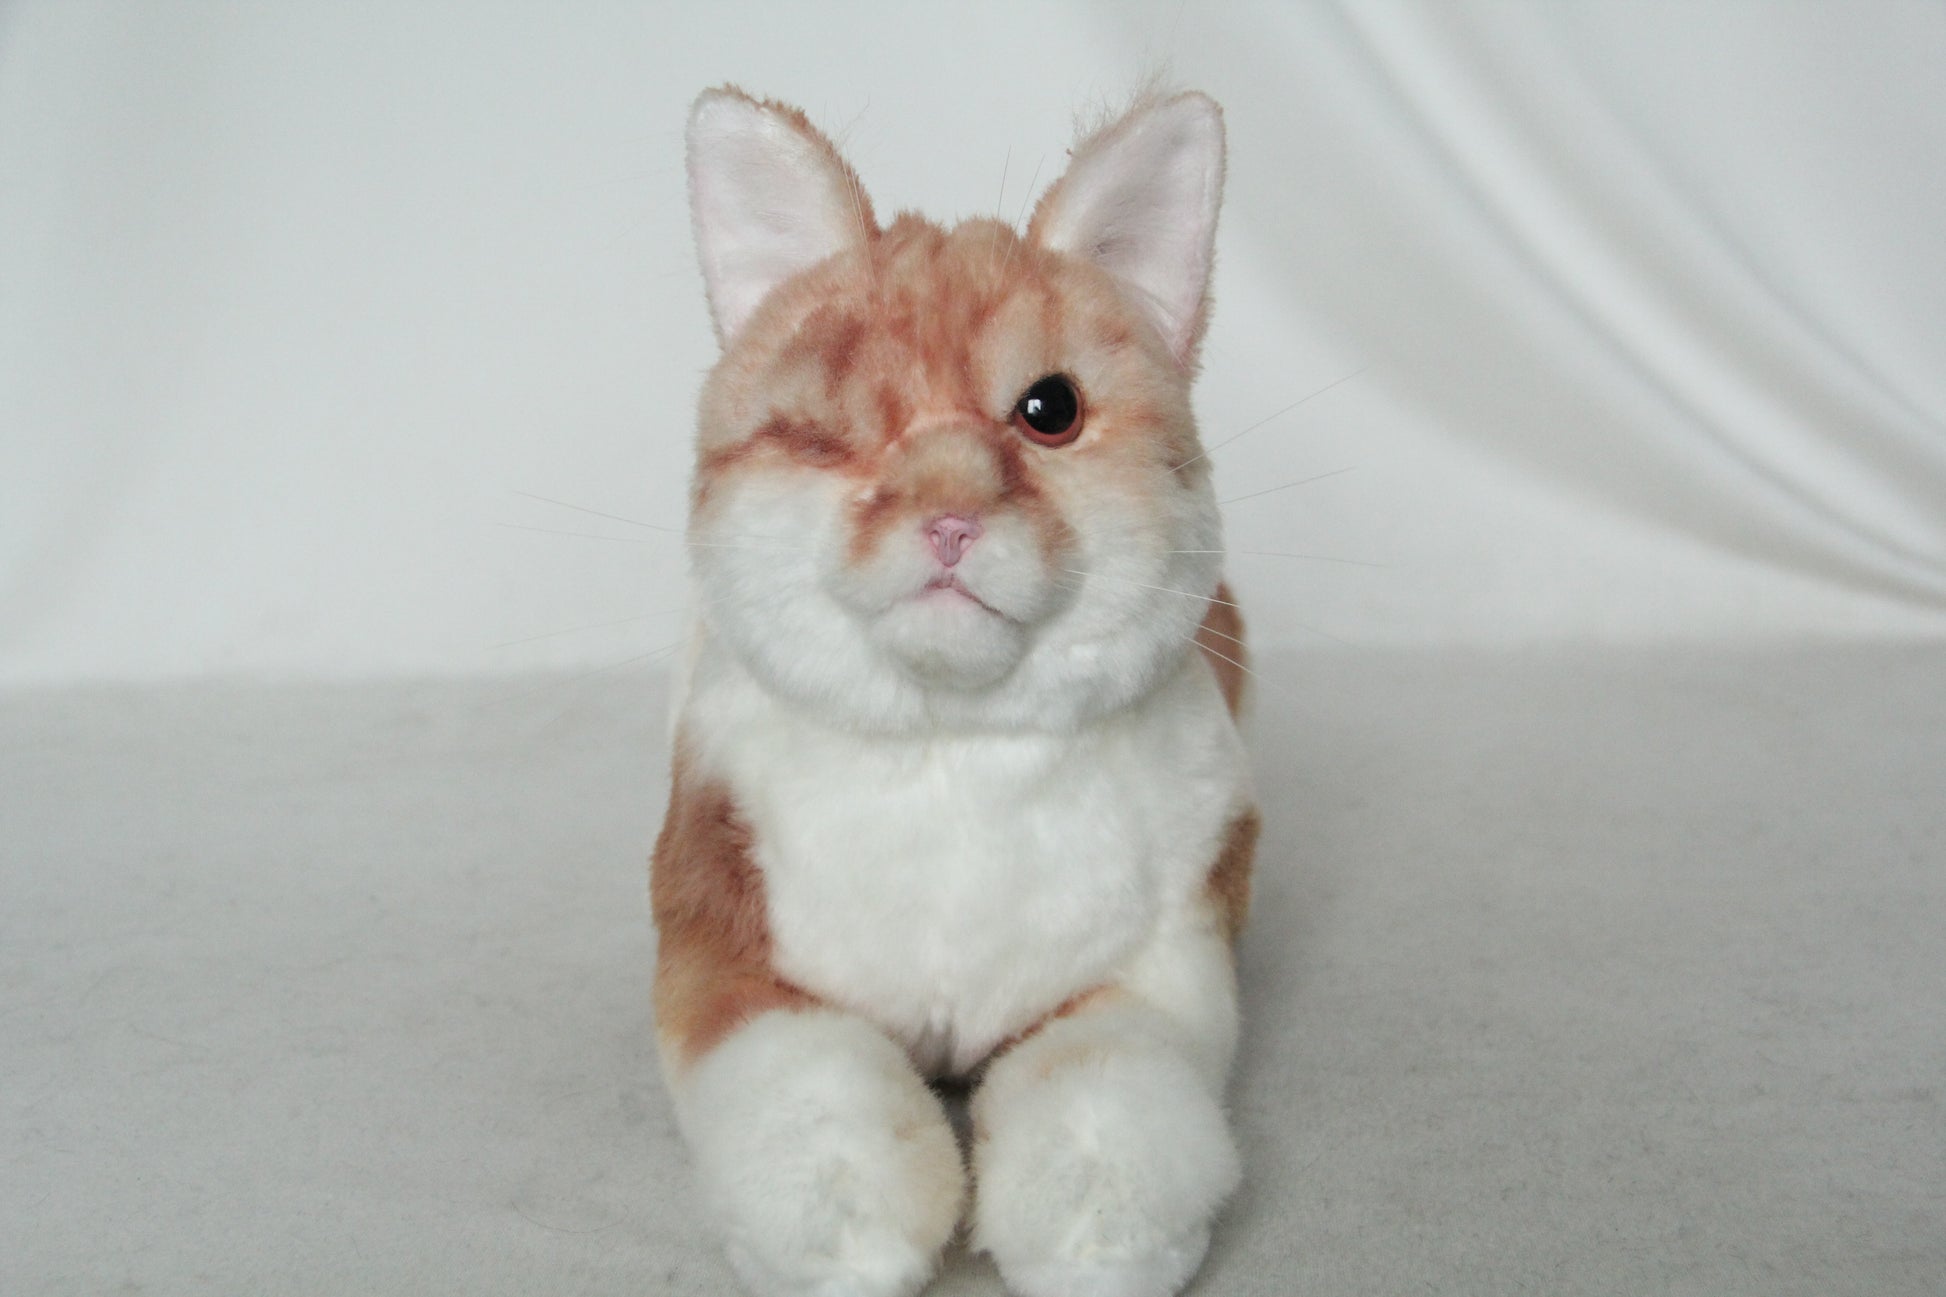 NO.33 Special orange cat - Chongker